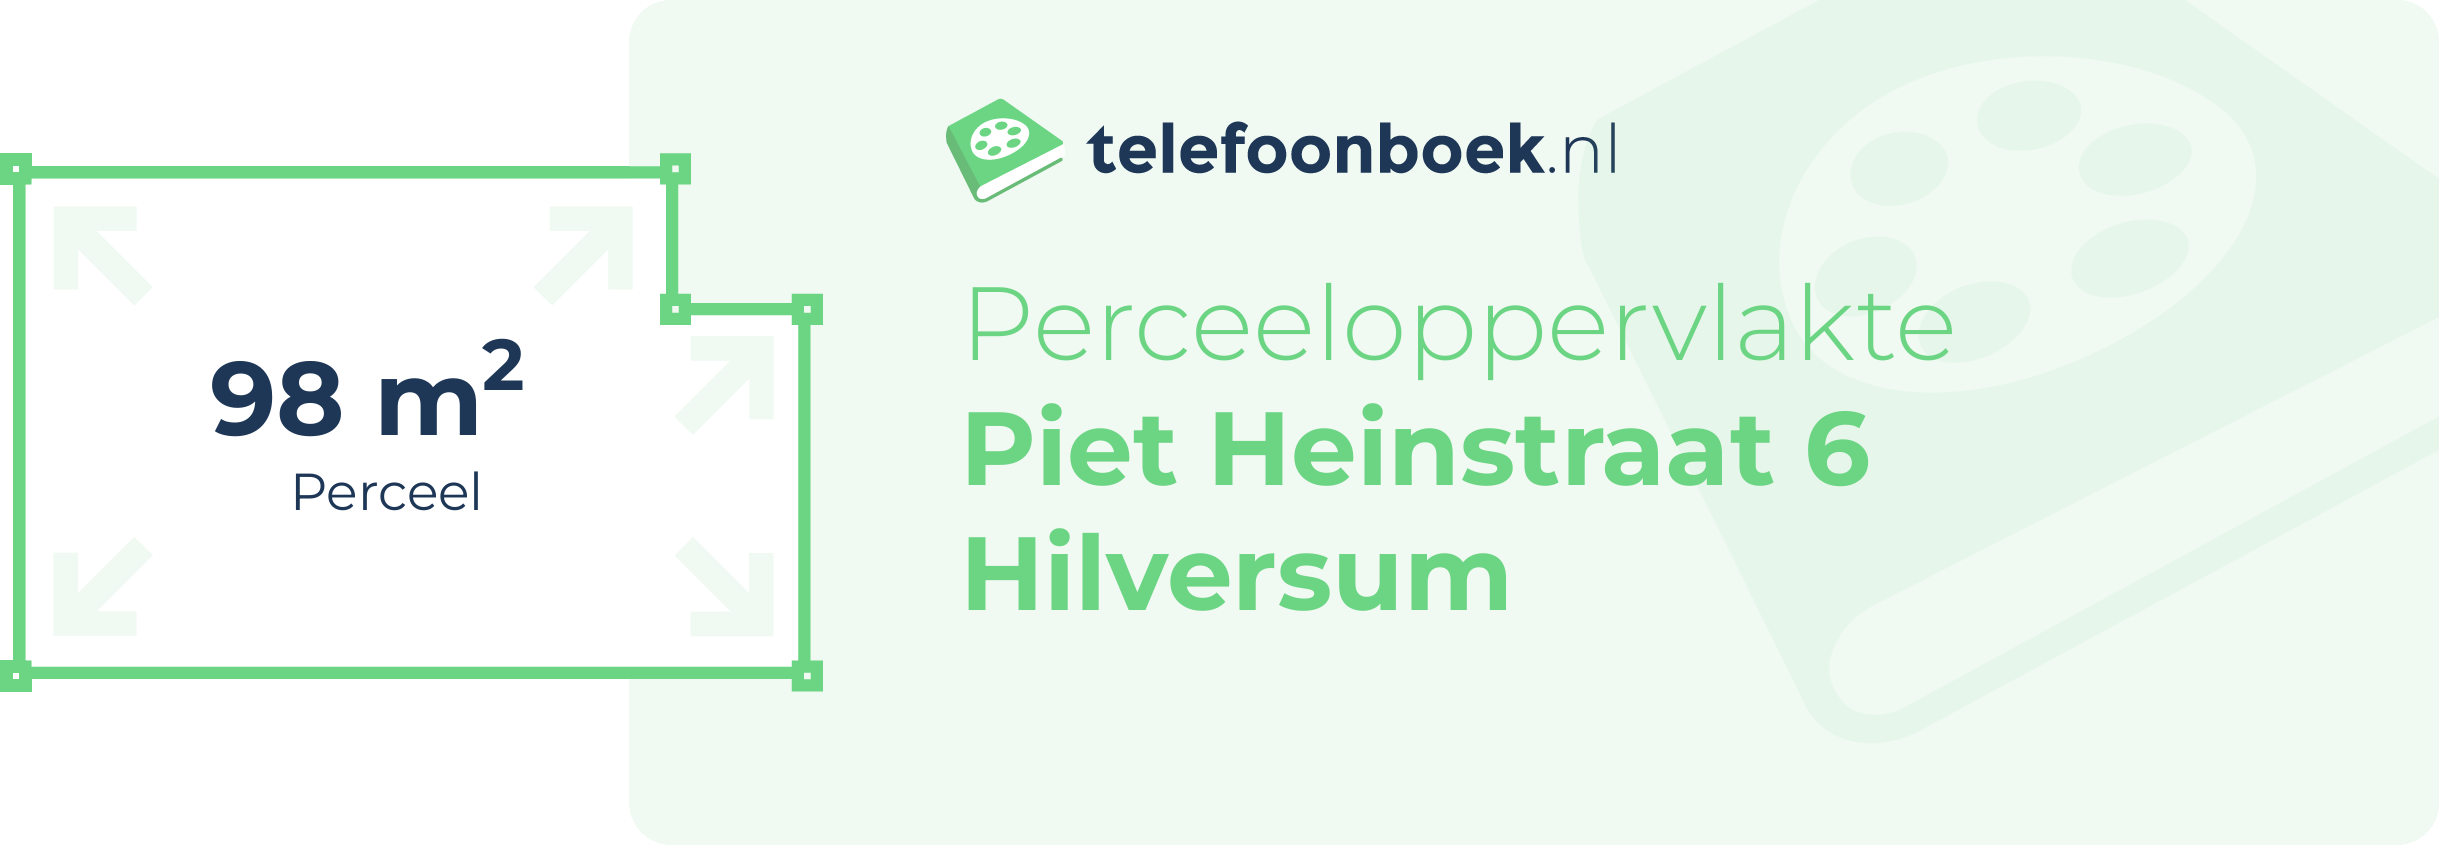 Perceeloppervlakte Piet Heinstraat 6 Hilversum